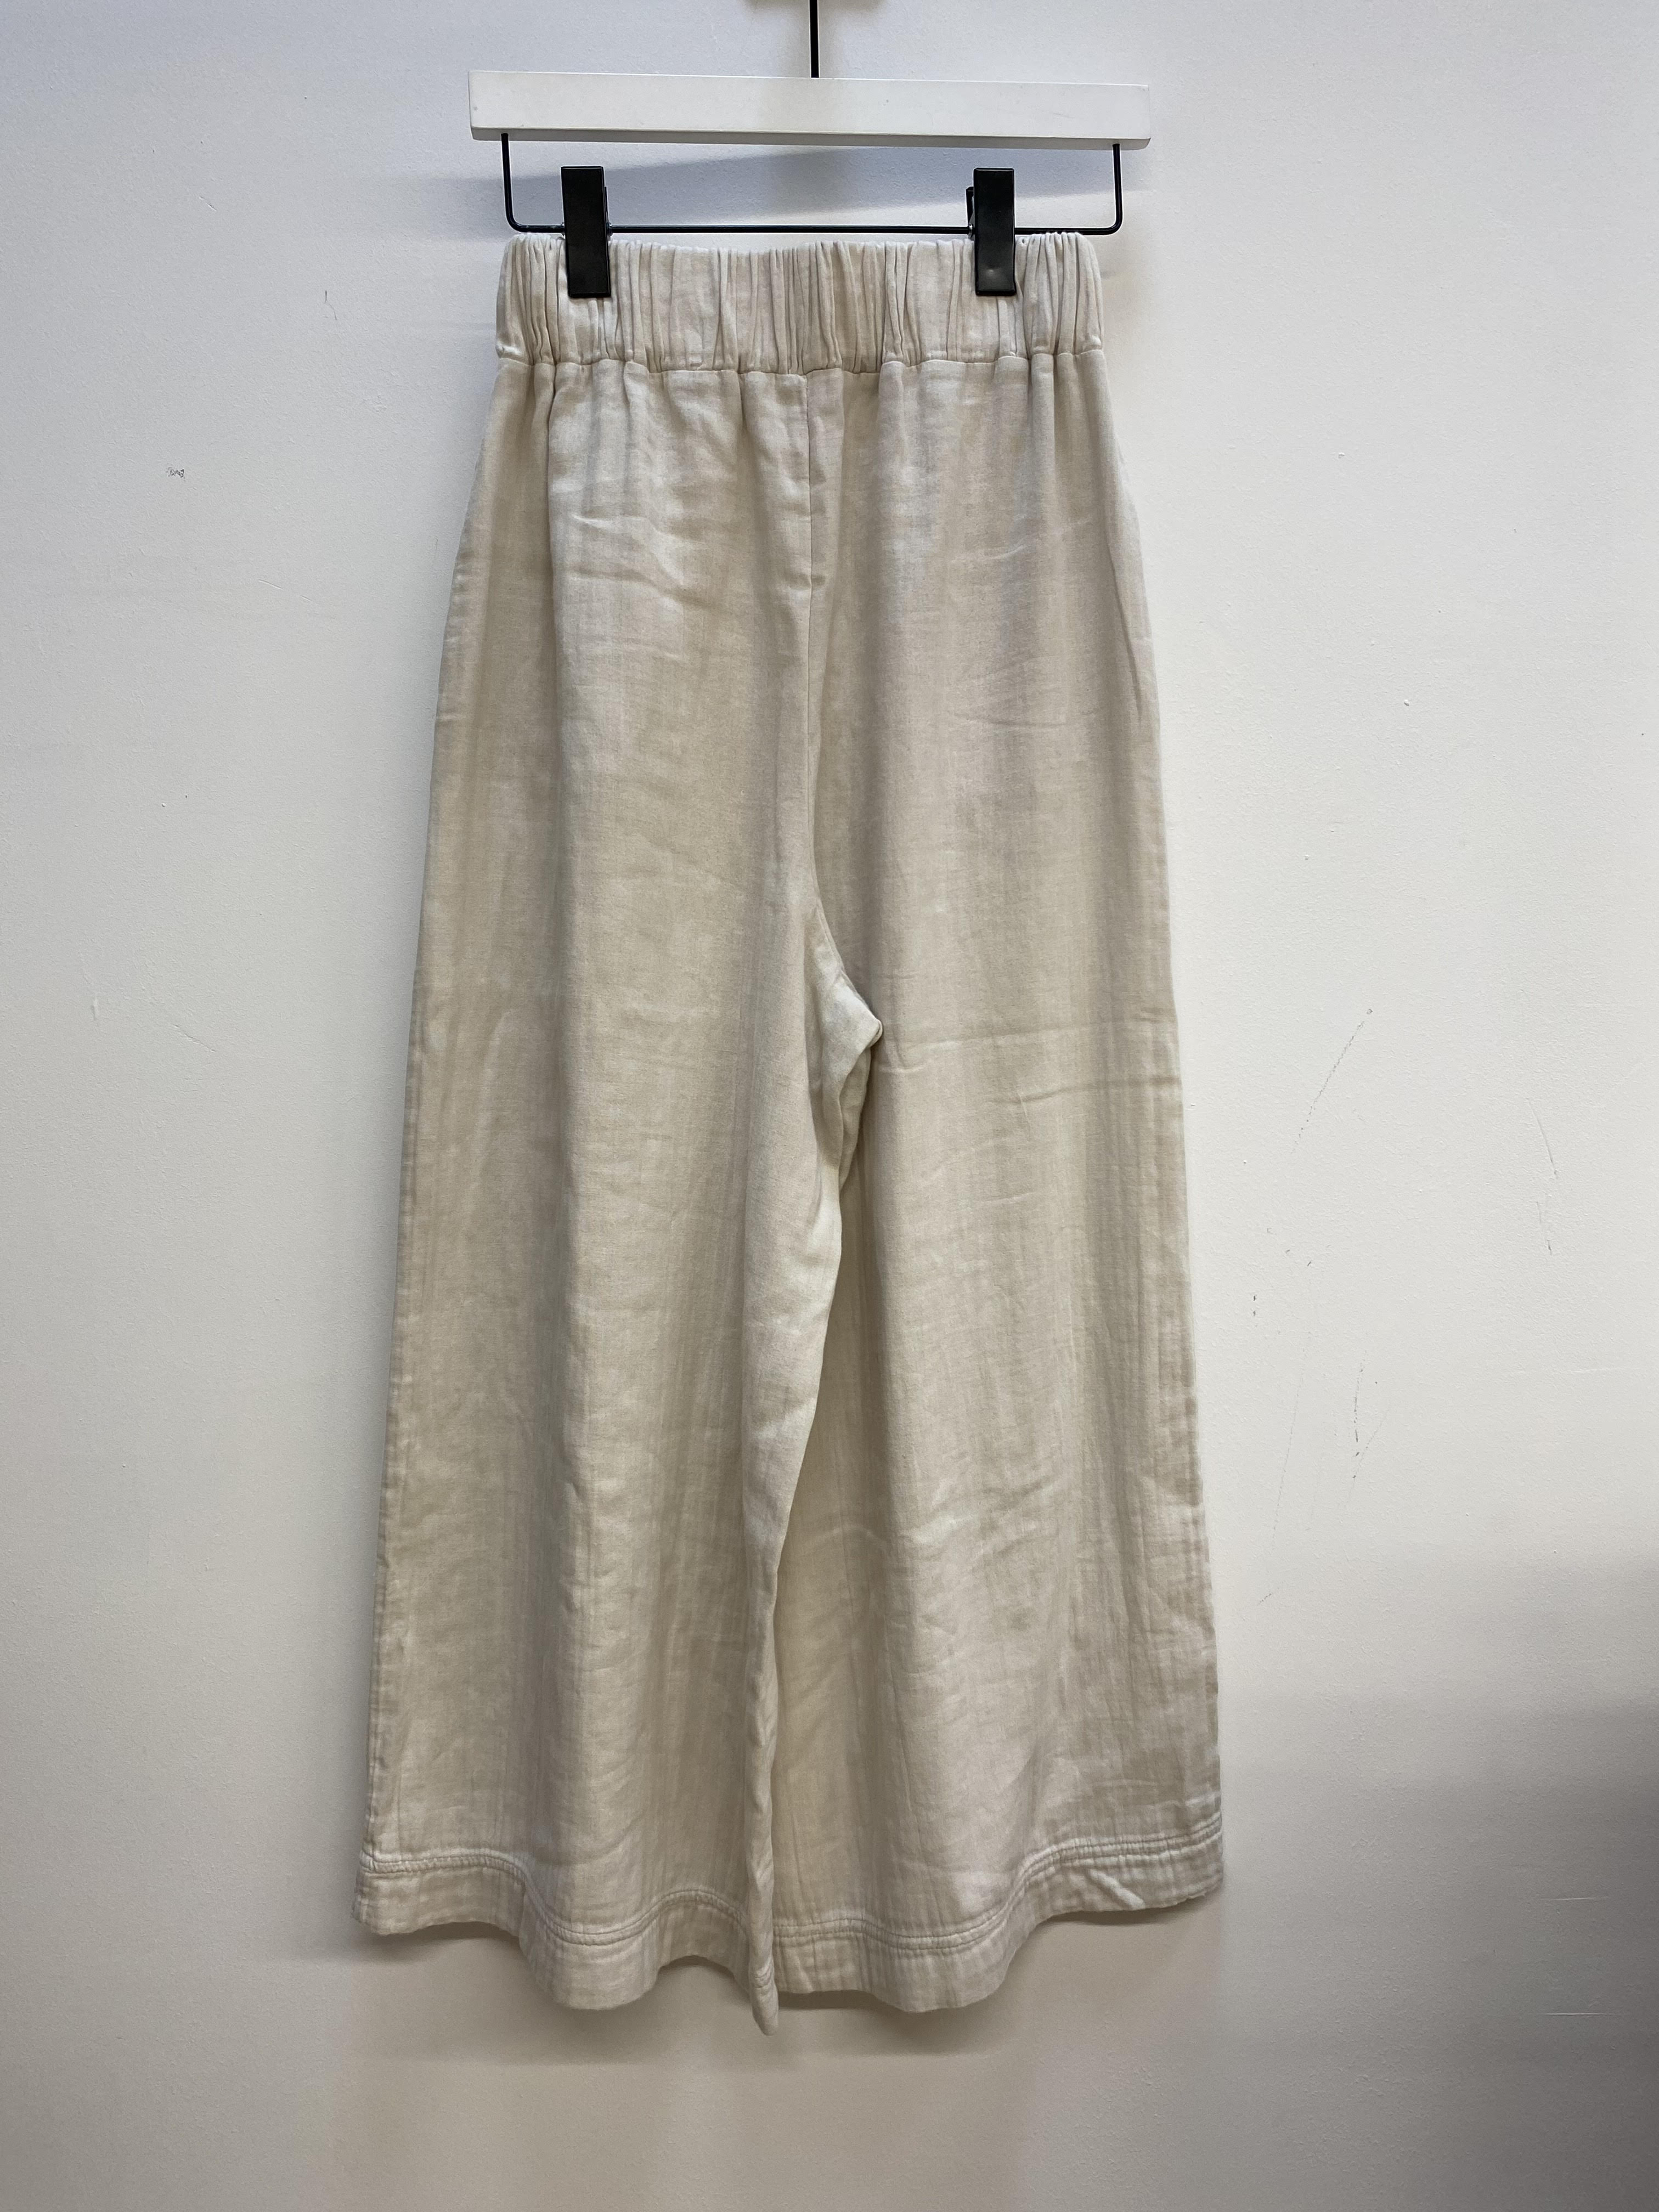 Evora Organic Cotton Trousers in Bone S